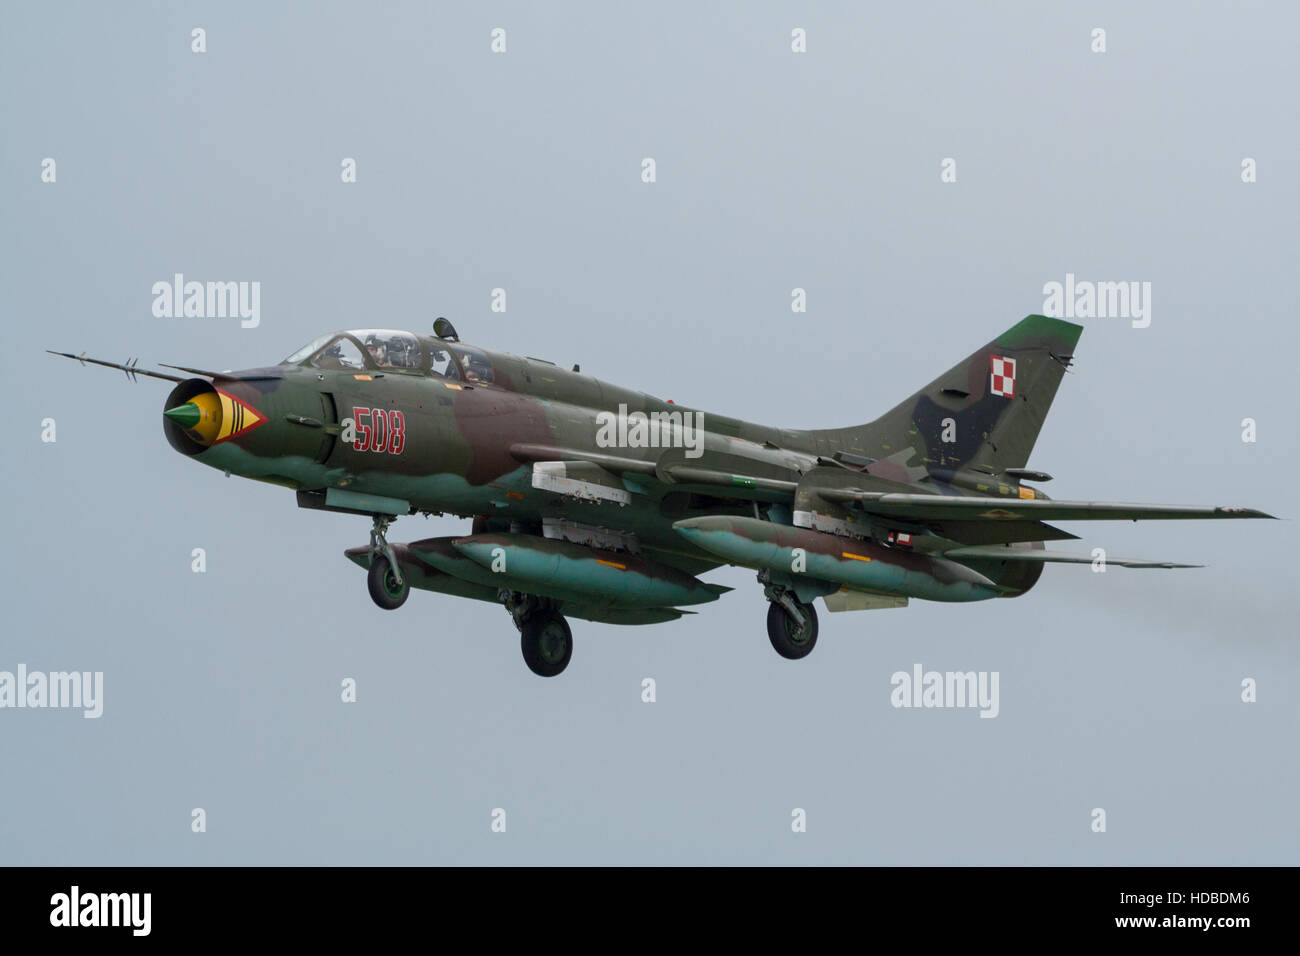 Polnische Luftwaffe Sukhoi Su-22 Bomber Flugzeug Landung Stockfoto